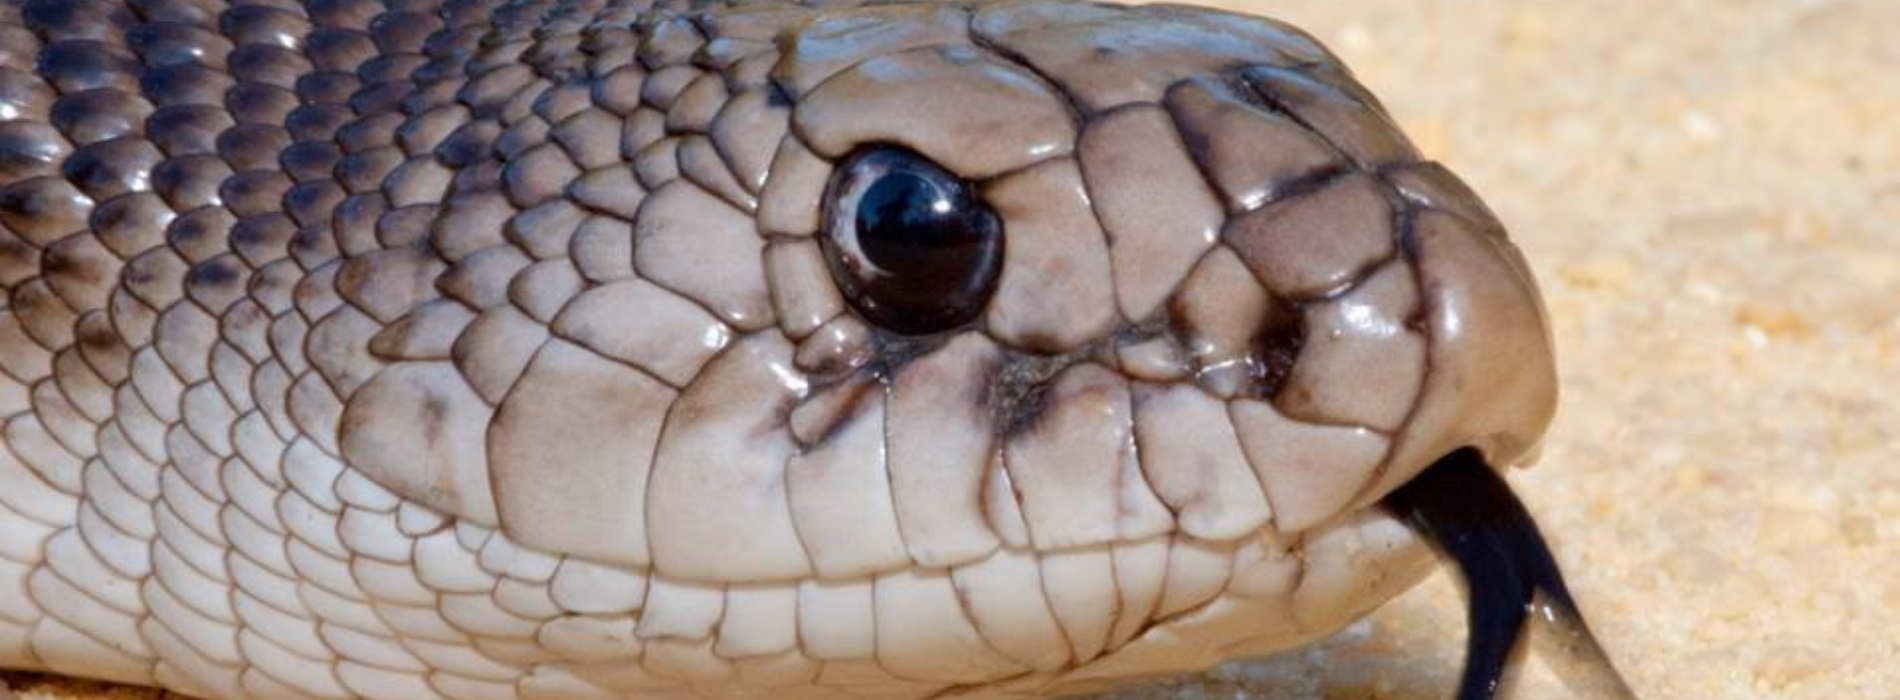 Florida Pine Snake